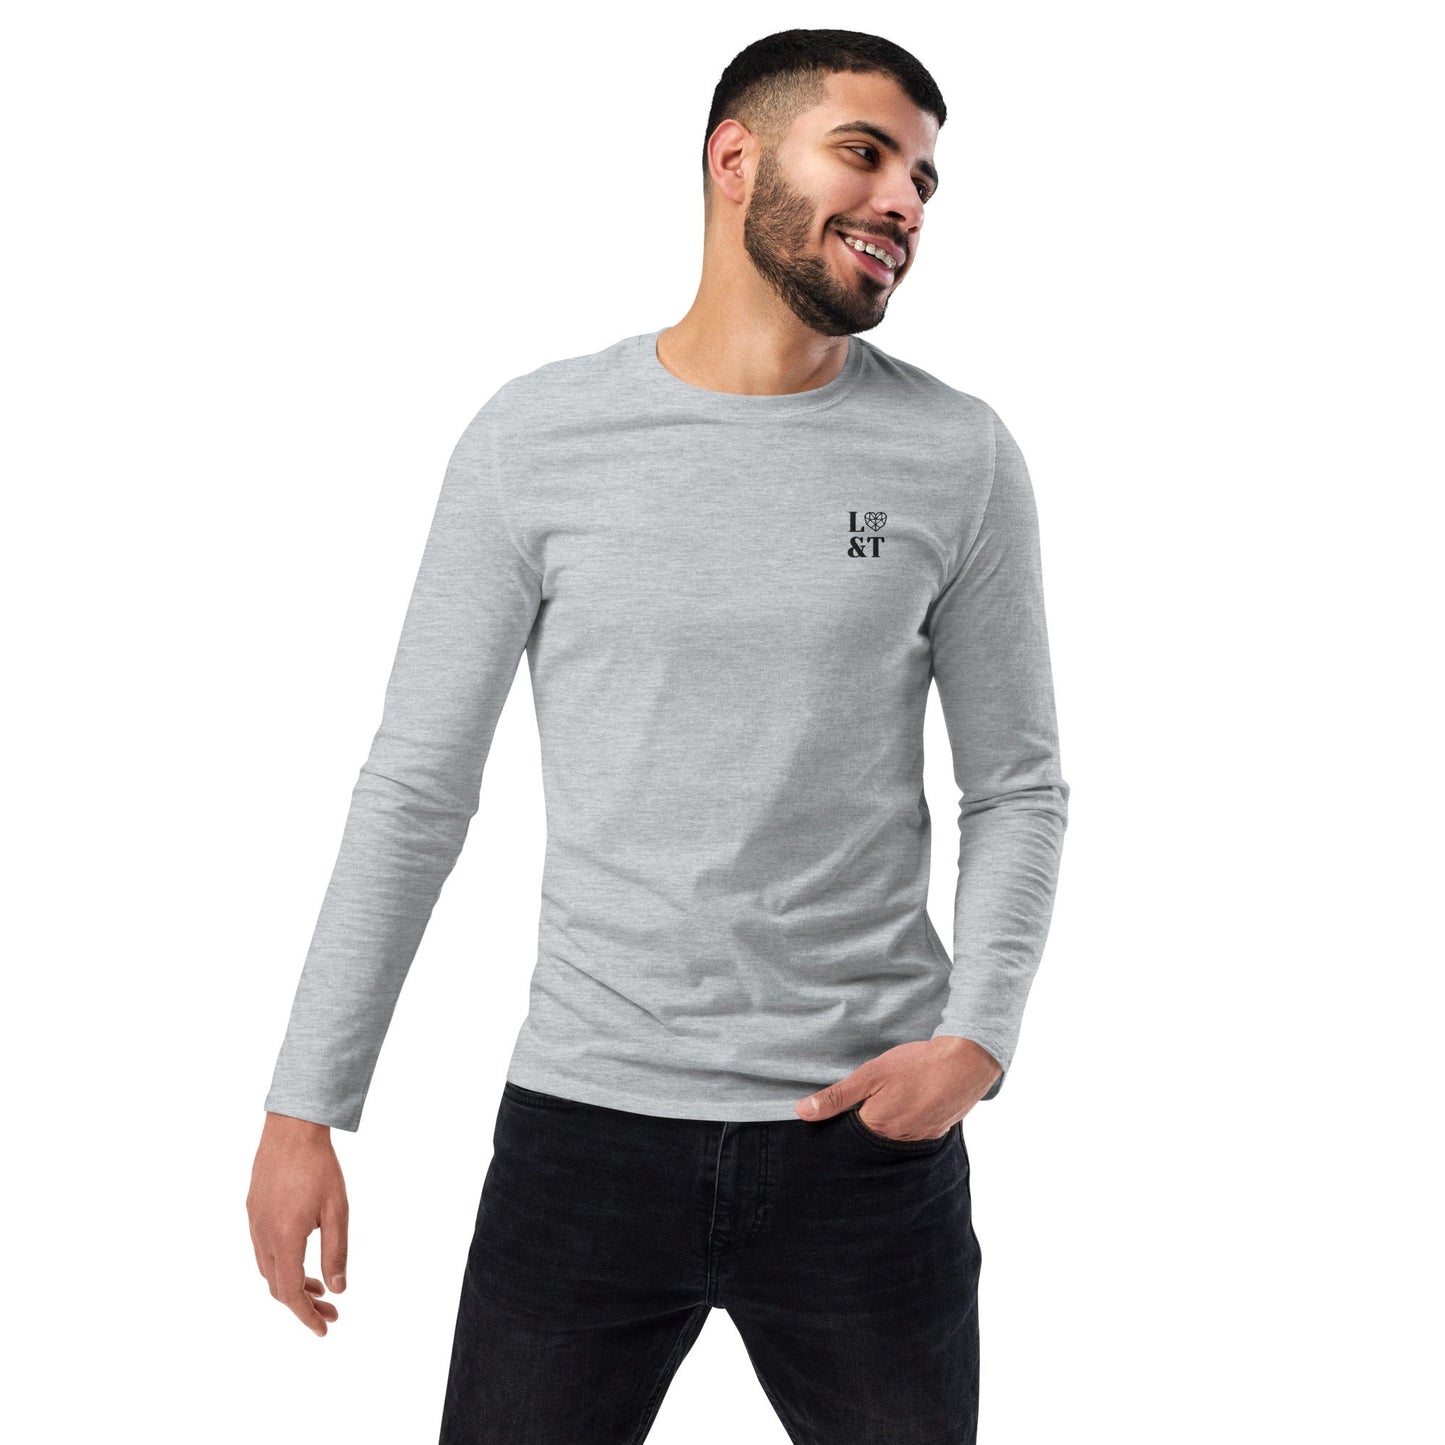 L&T's Unisex Long Sleeve T-Shirt